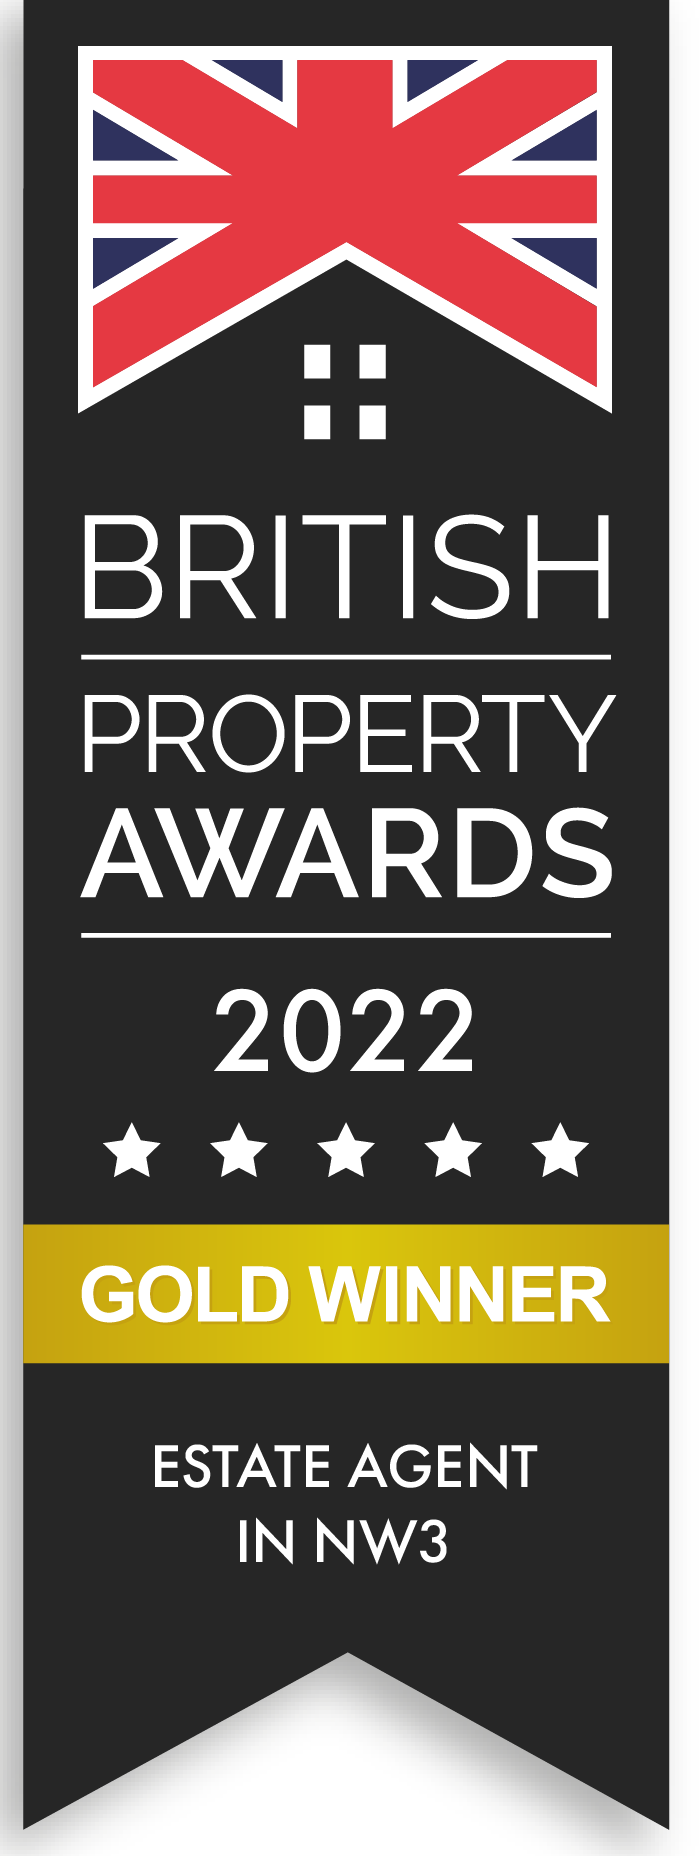 British Property Awards 2022: Gold Winner